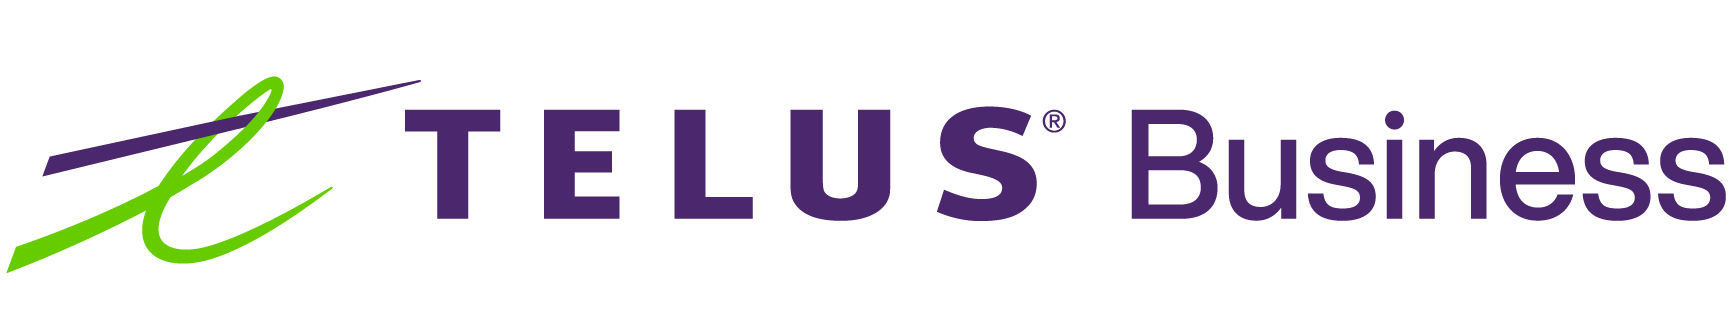 Telus Business logo